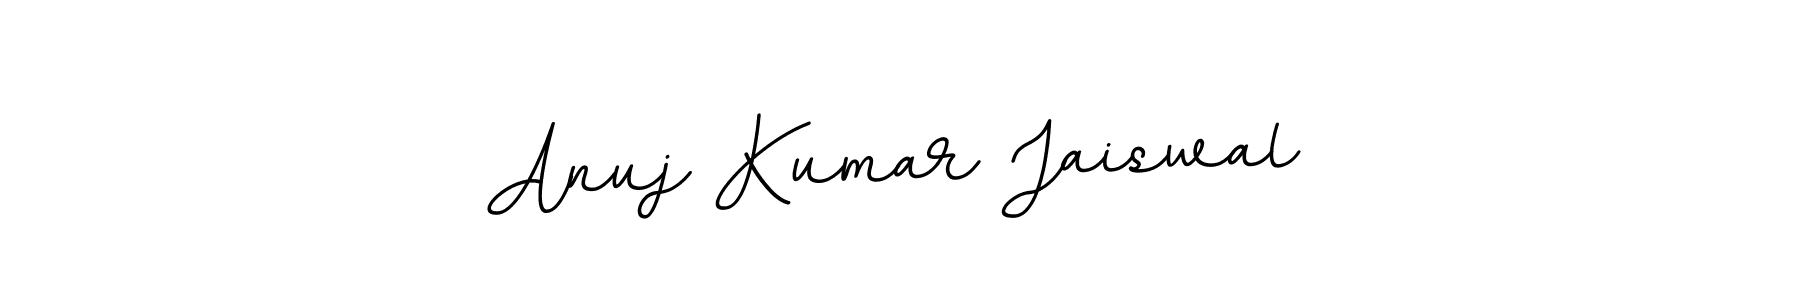 How to Draw Anuj Kumar Jaiswal signature style? BallpointsItalic-DORy9 is a latest design signature styles for name Anuj Kumar Jaiswal. Anuj Kumar Jaiswal signature style 11 images and pictures png